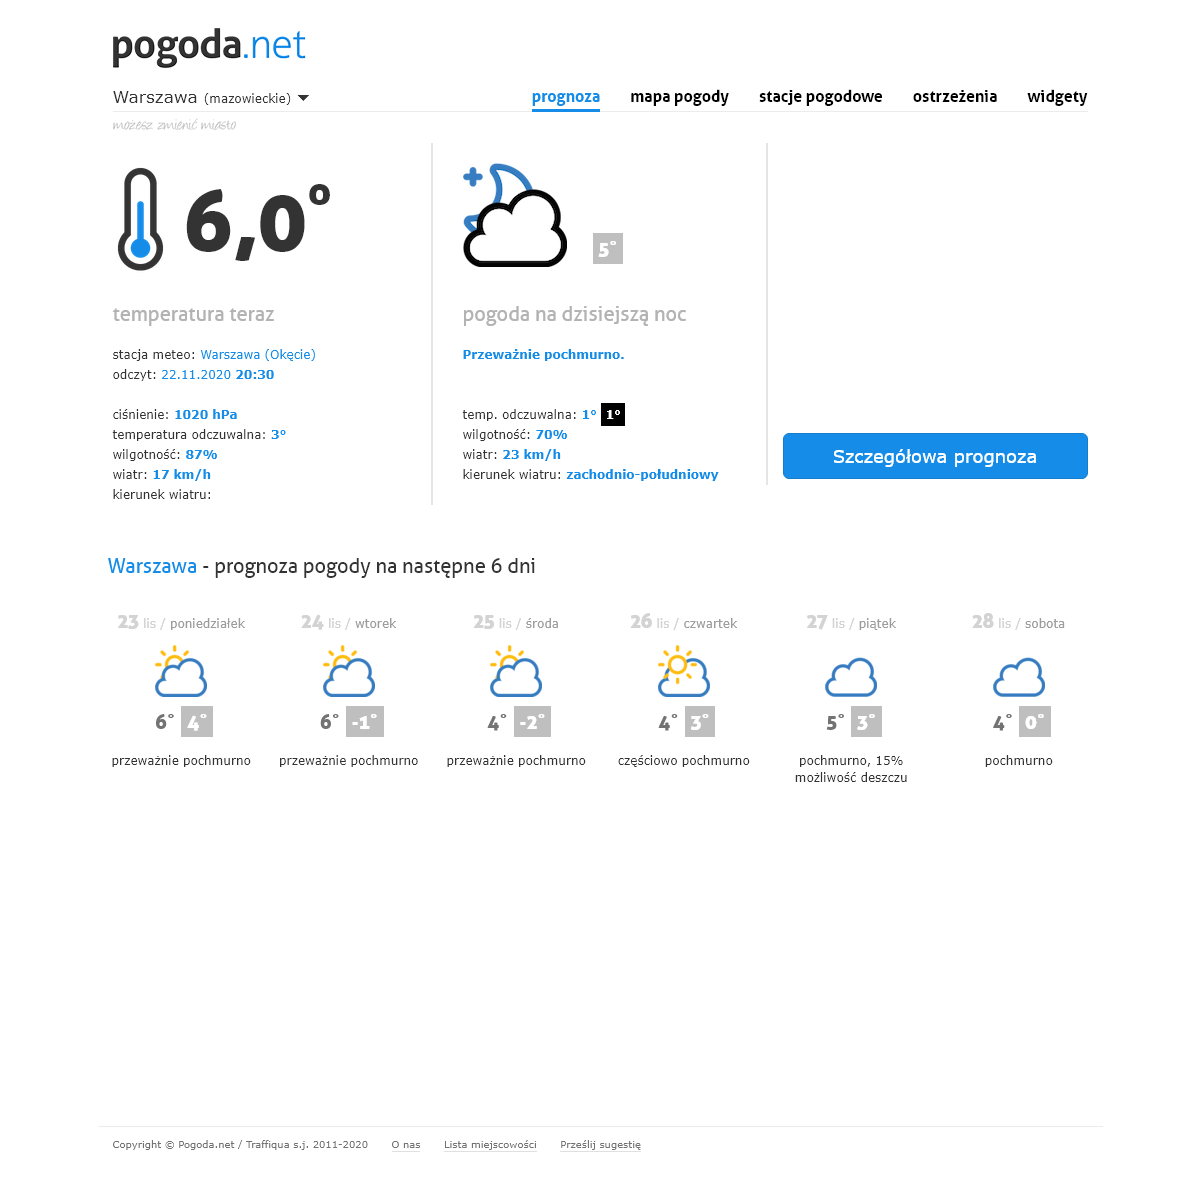 A complete backup of pogoda.net